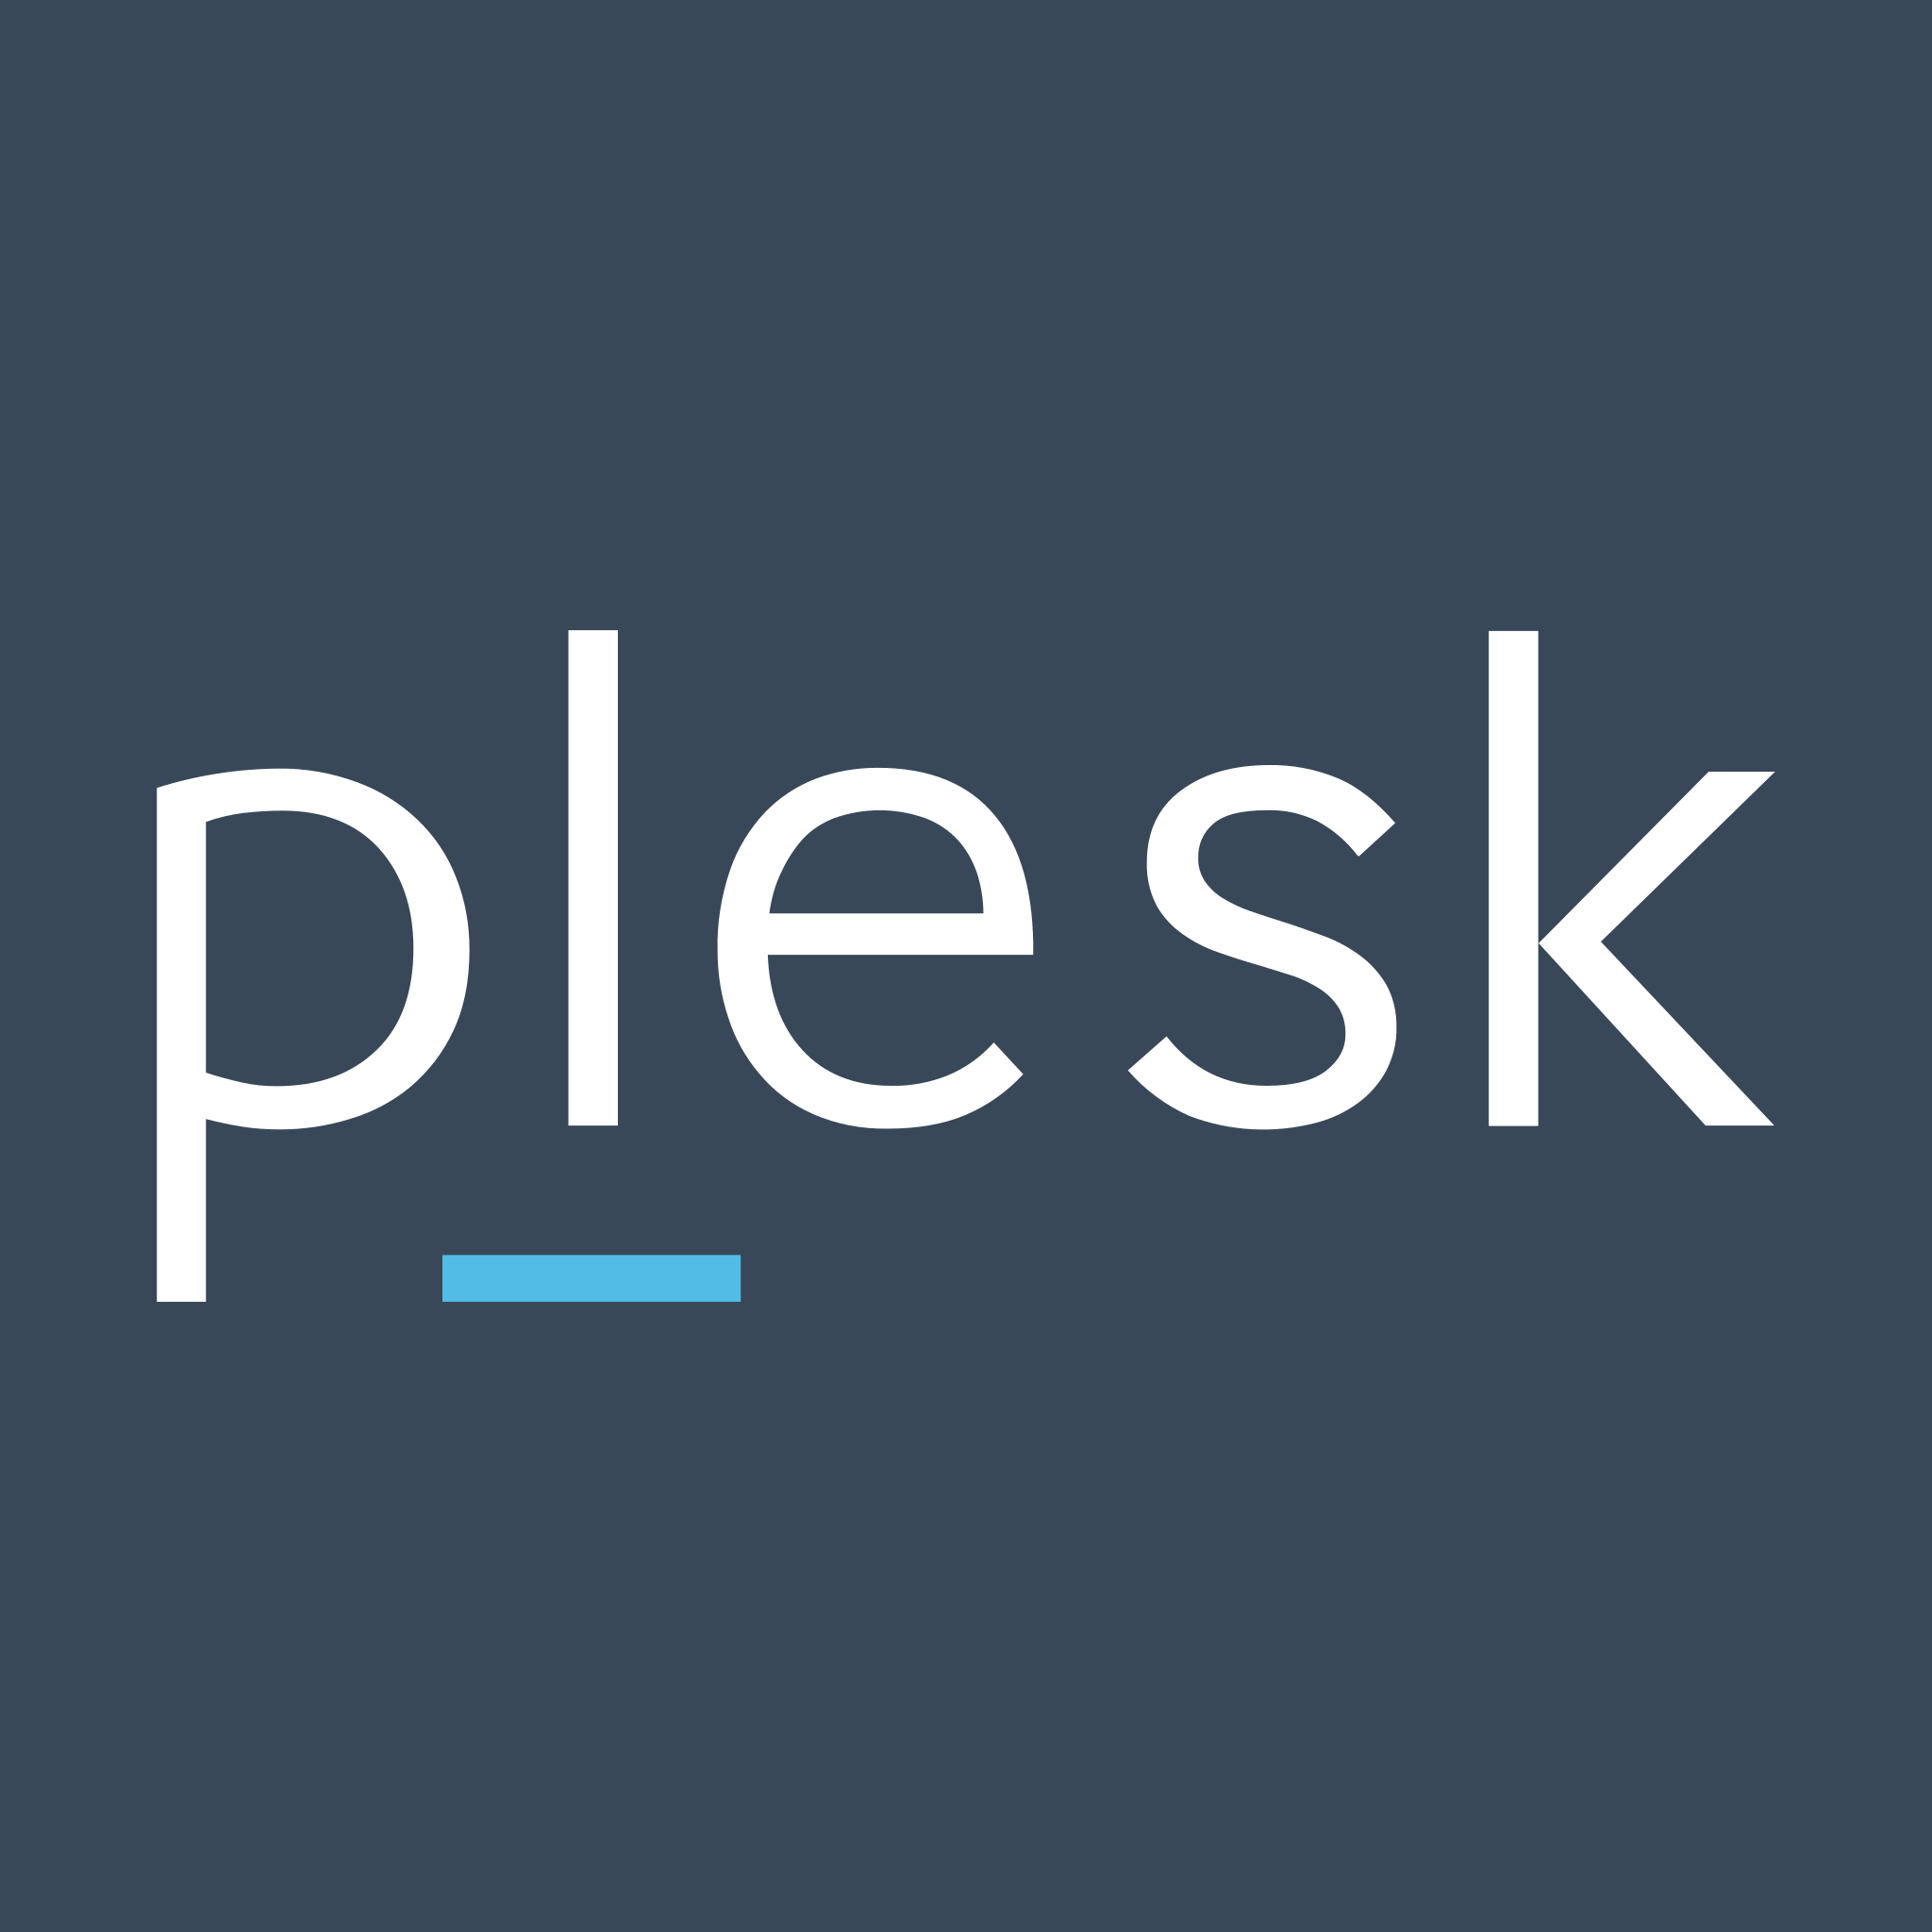 Plesk - Web Hosting